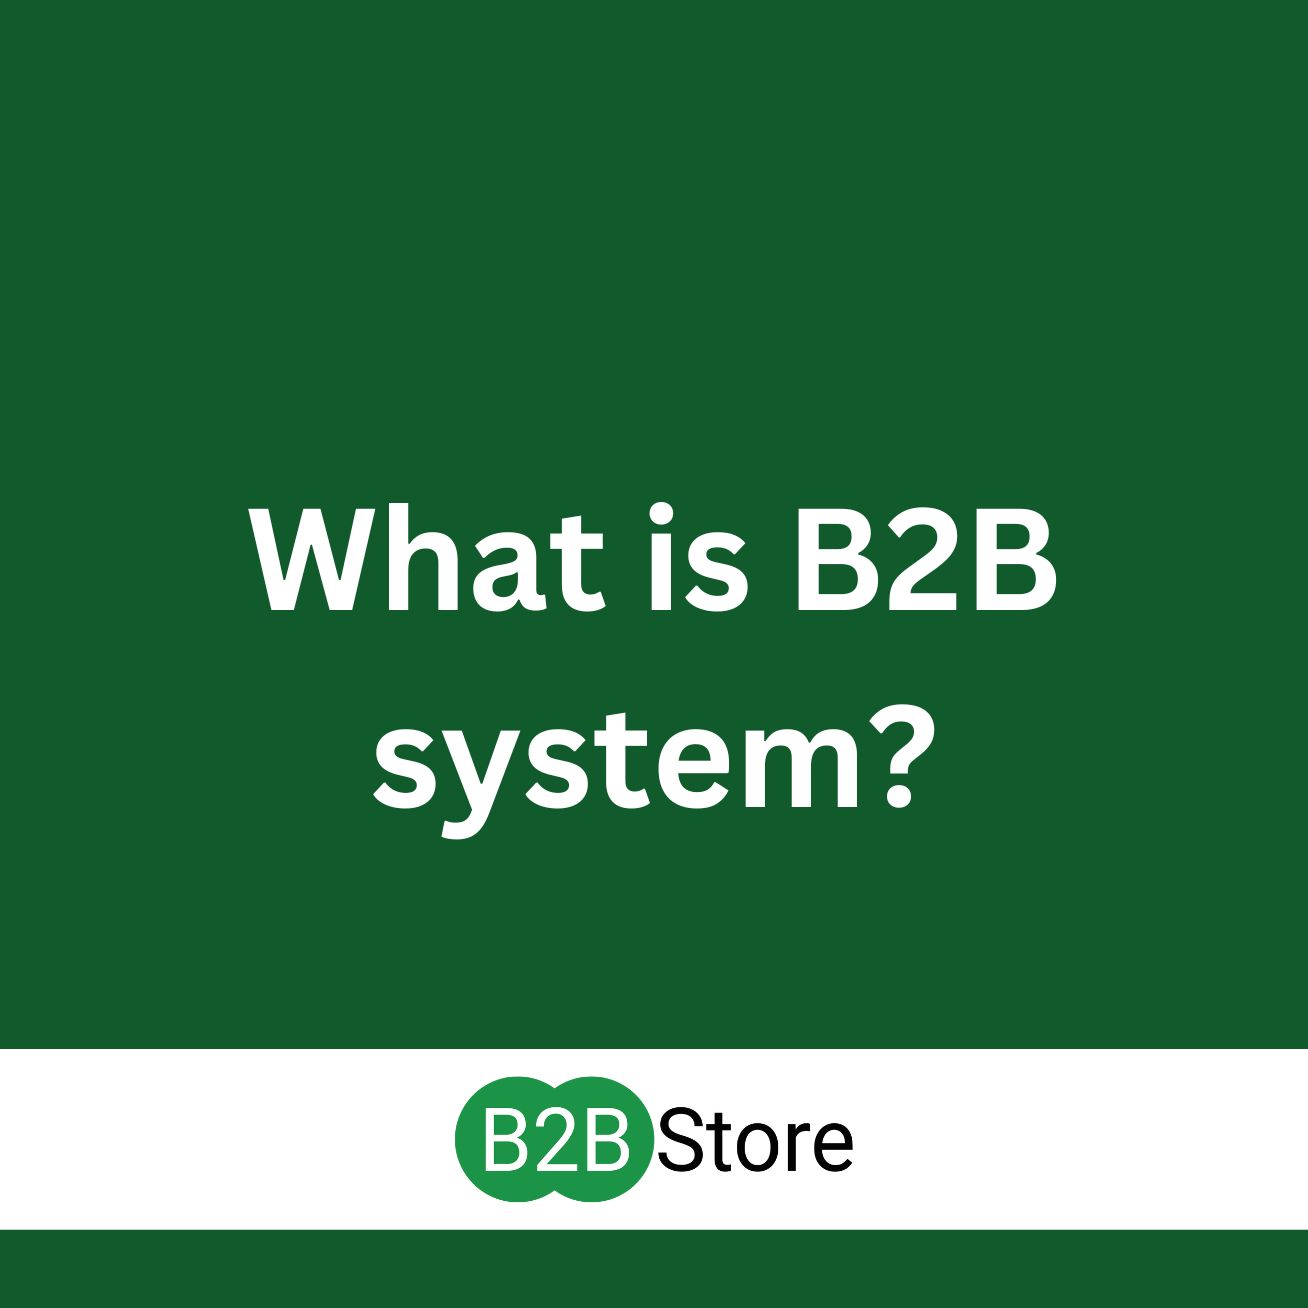 B2B Store What is B2B system?